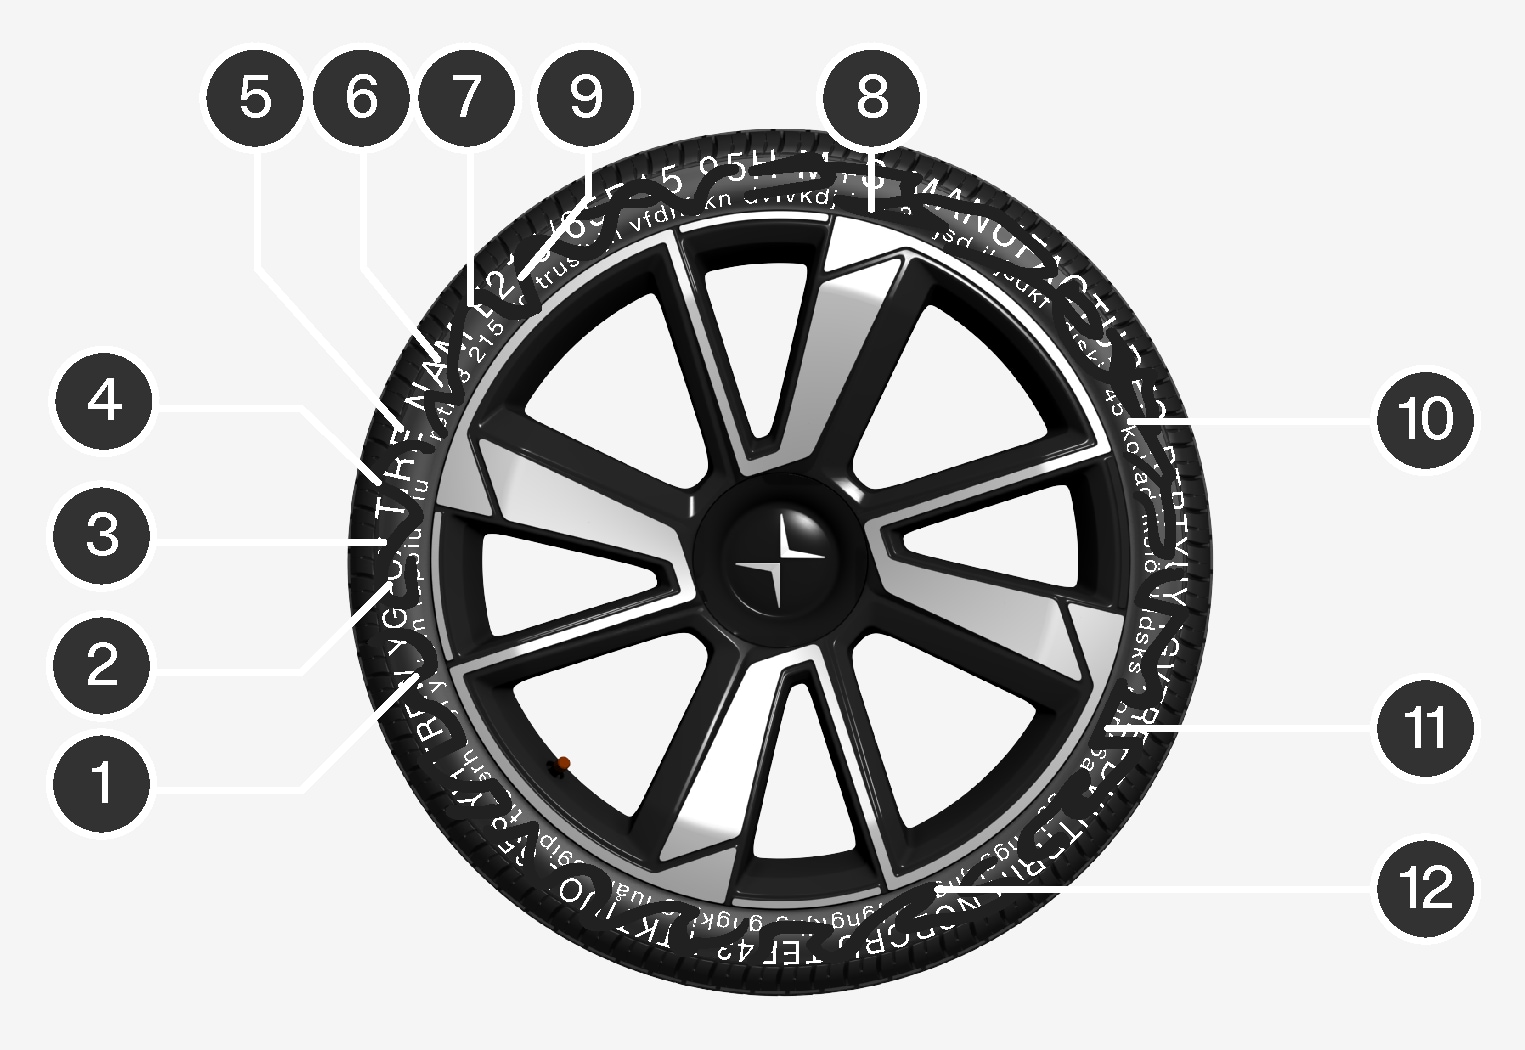 PS-1926-Tire sidewall designations (USA)